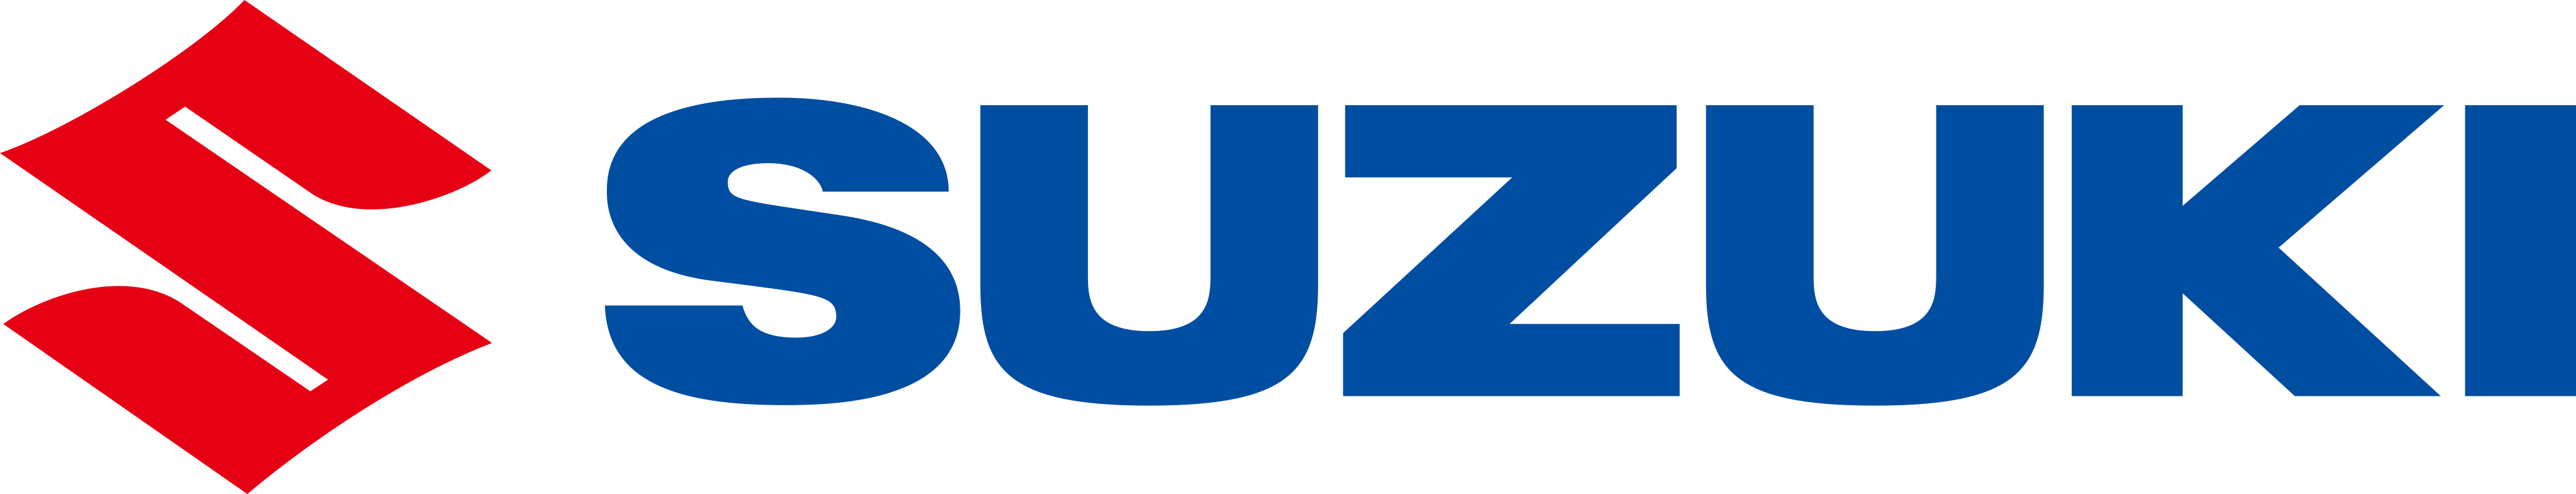 Logo Suzuki Maruti Picture HQ Image Free PNG Image